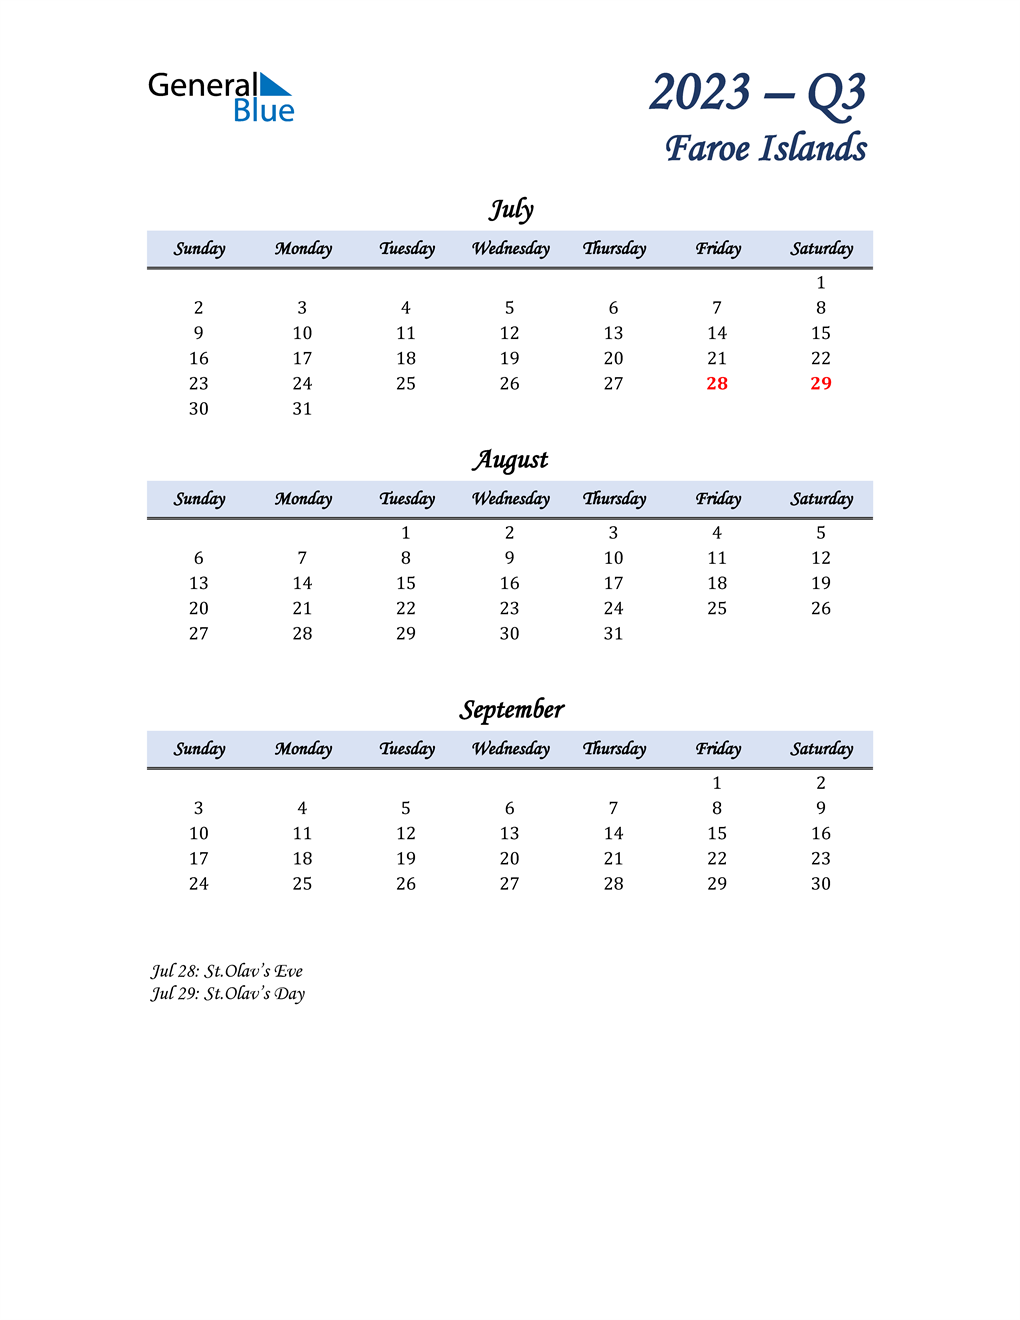  July, August, and September Calendar for Faroe Islands